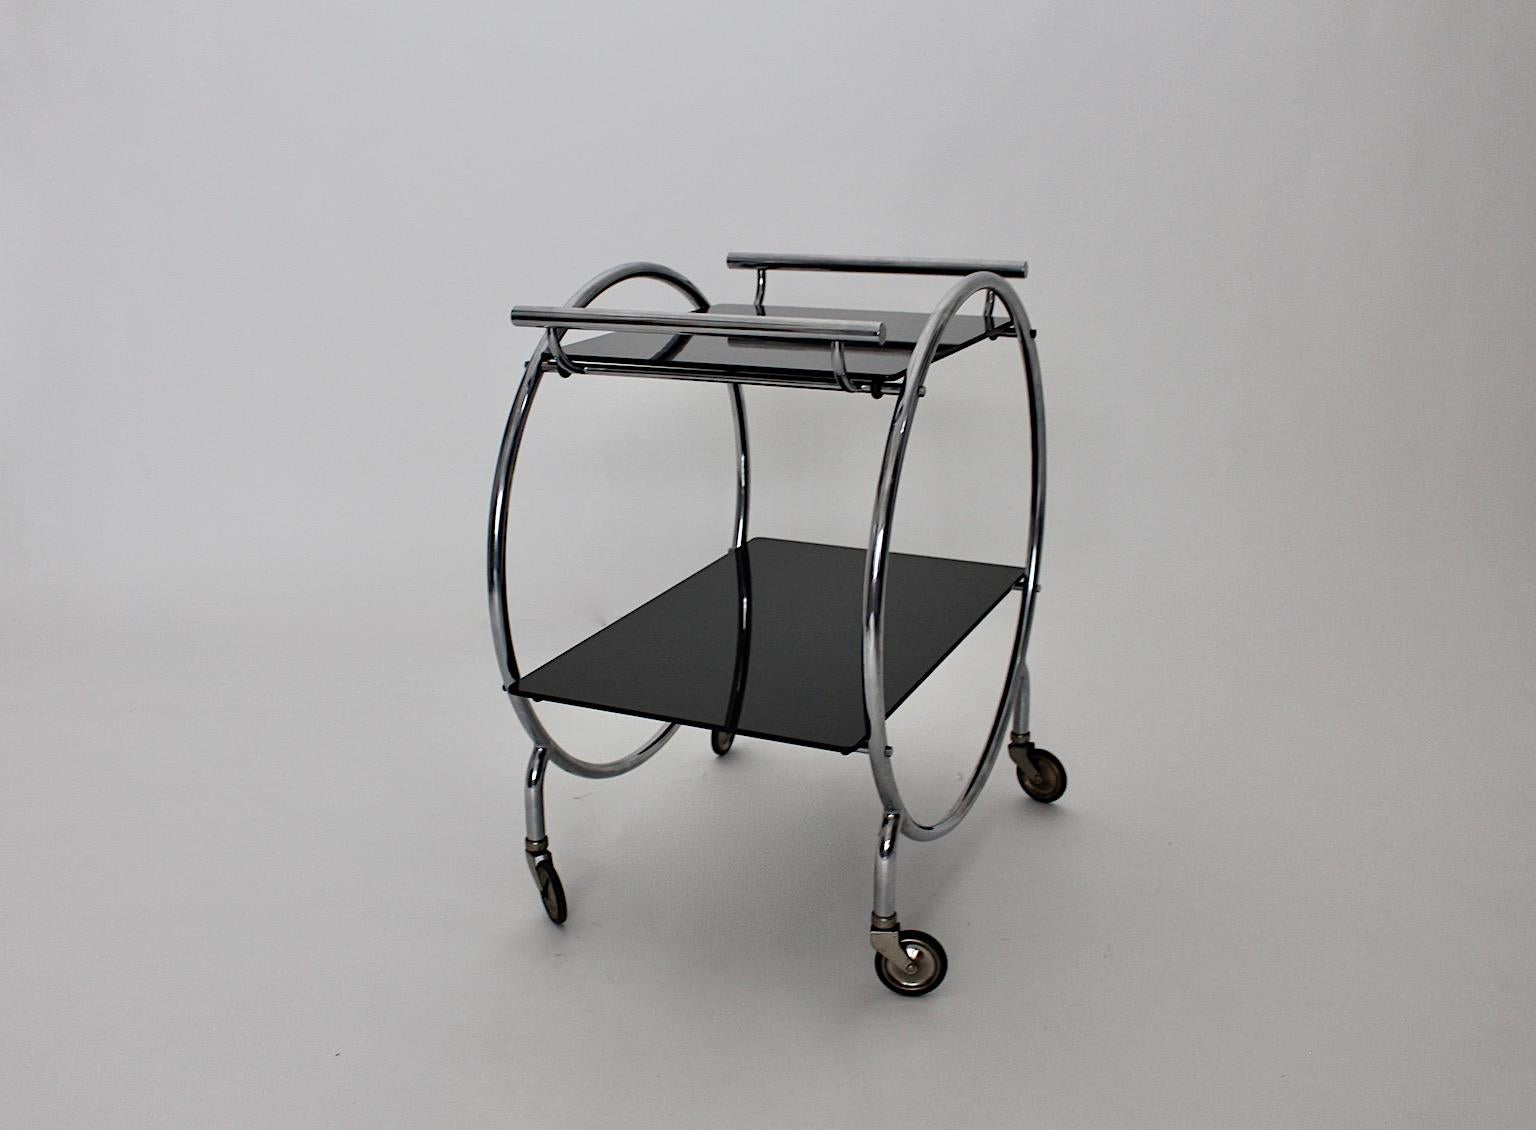 Art Deco Era Vintage Bauhaus Chromed Metal Glass Bar Cart or Cart, 1930s Germany For Sale 1